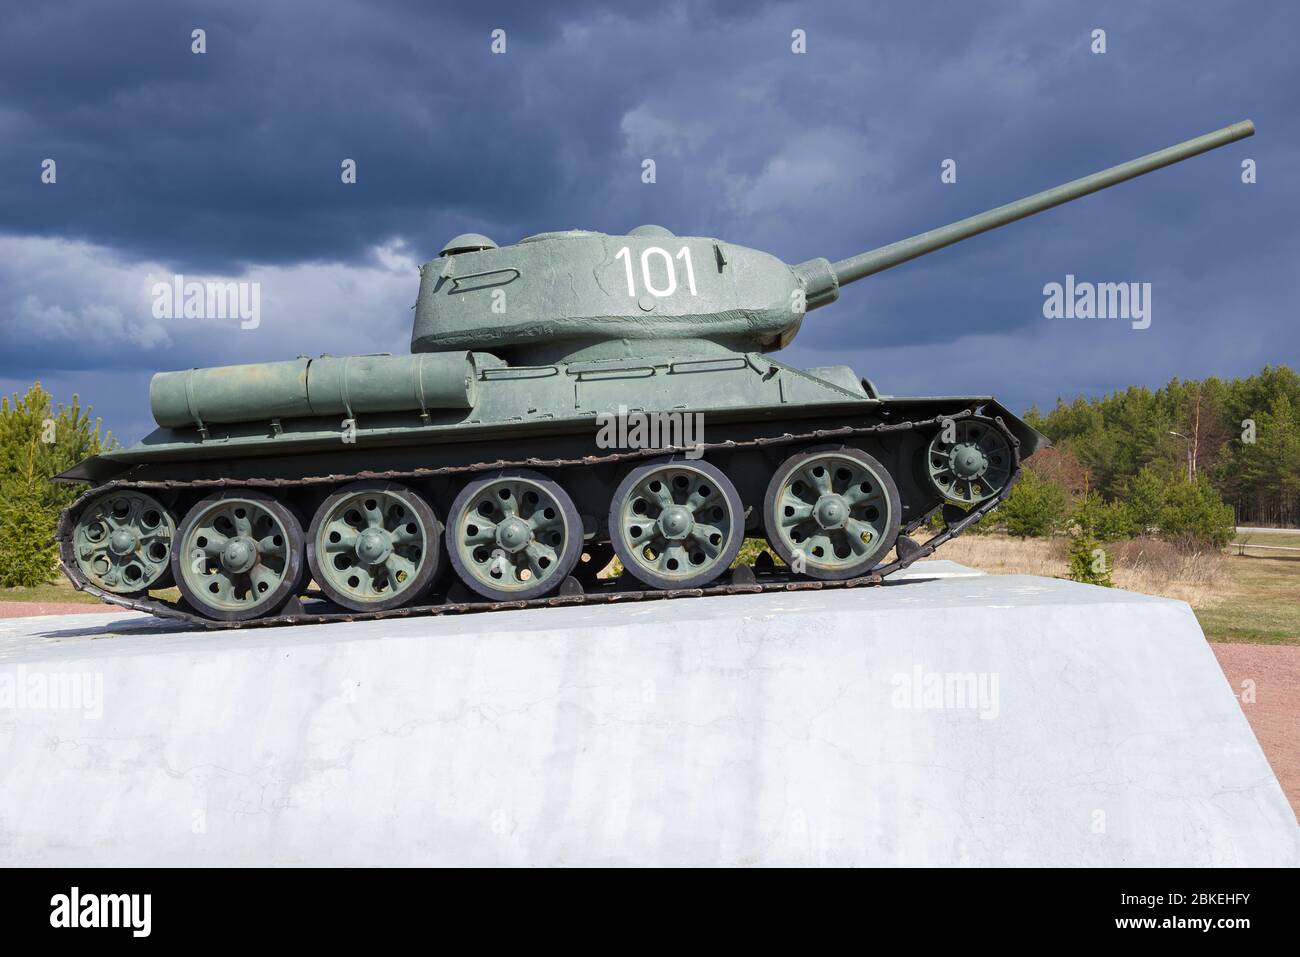 KIROVSK, RUSSLAND - 26. APRIL 2020: Panzerdenkmal T-34-85 am Newski-Patch unter stürmischem Himmel am Aprilnachmittag Stockfoto